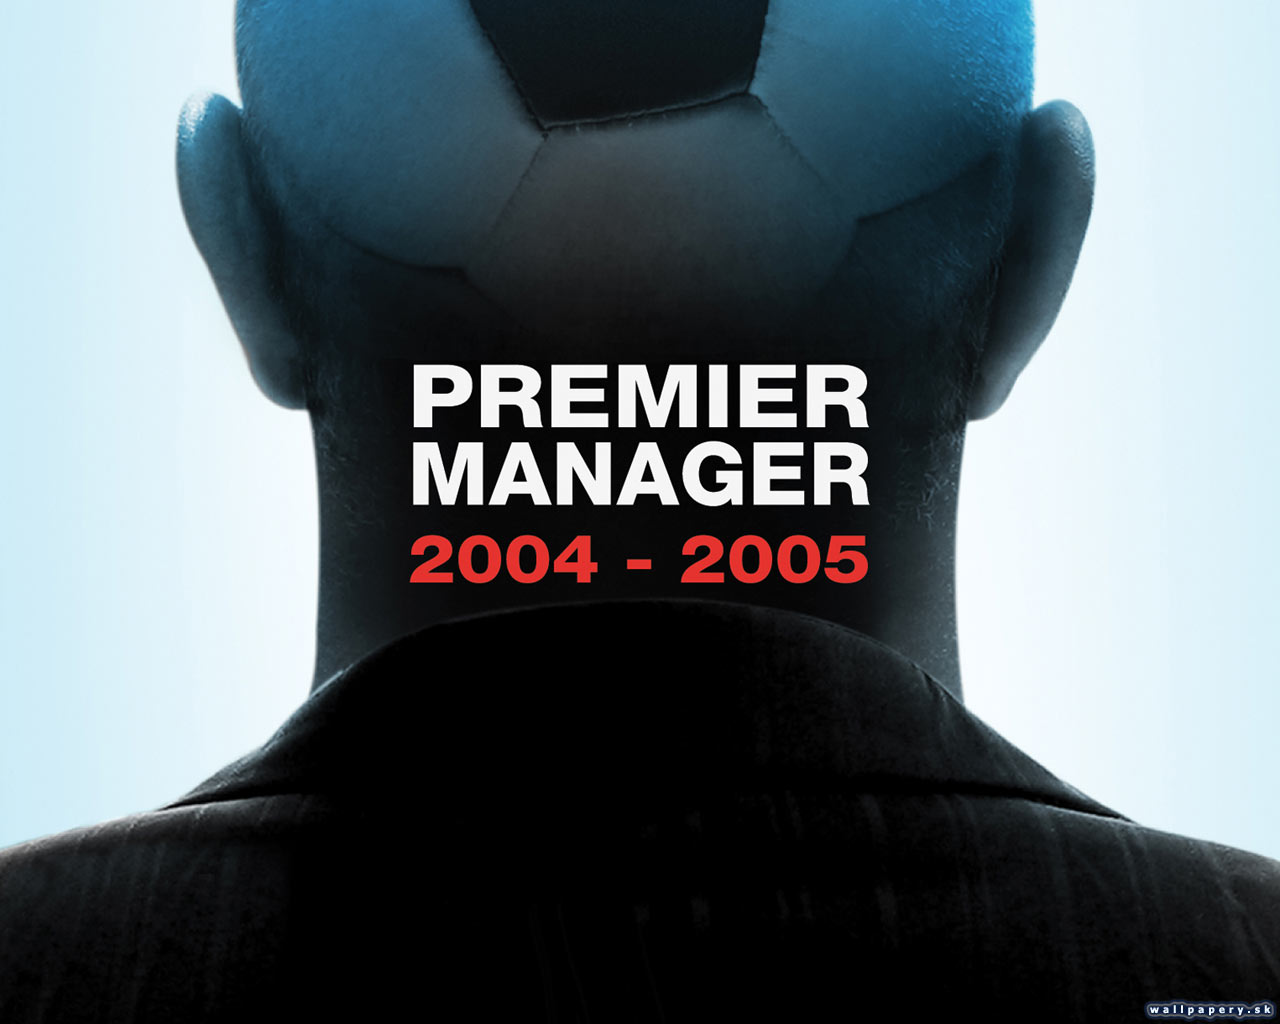 Premier Manager 2004 - 2005 - wallpaper 2